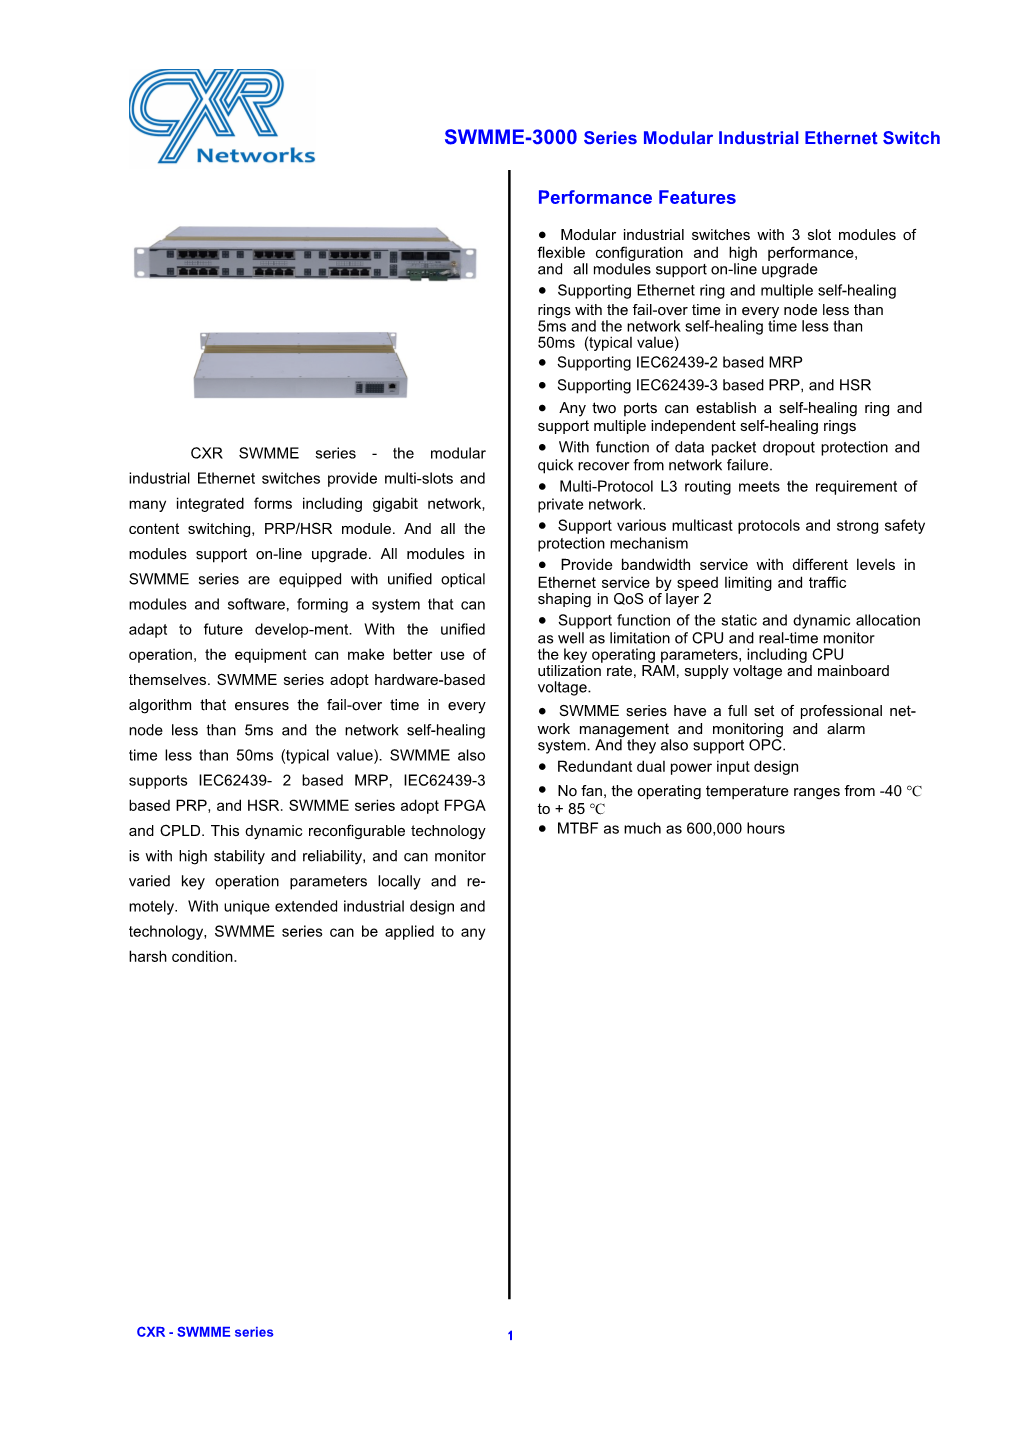 SWMME-3000 Series Modular Industrial Ethernet Switch (EN)